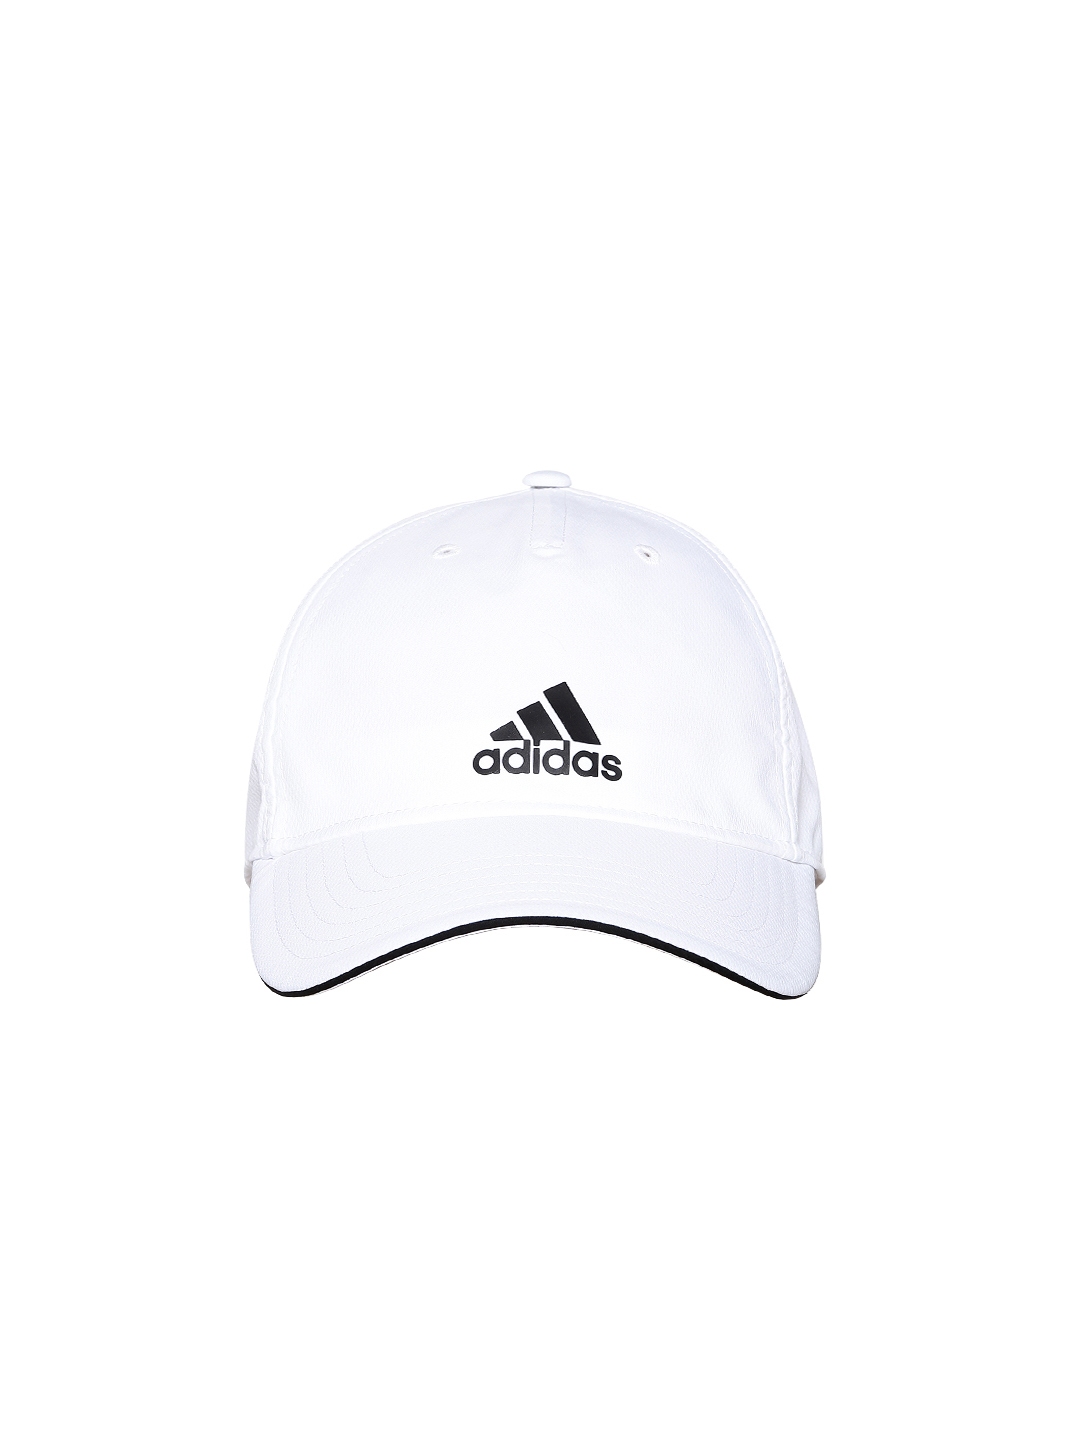 Buy ADIDAS Unisex White Cap - Caps for Unisex 705571 | Myntra